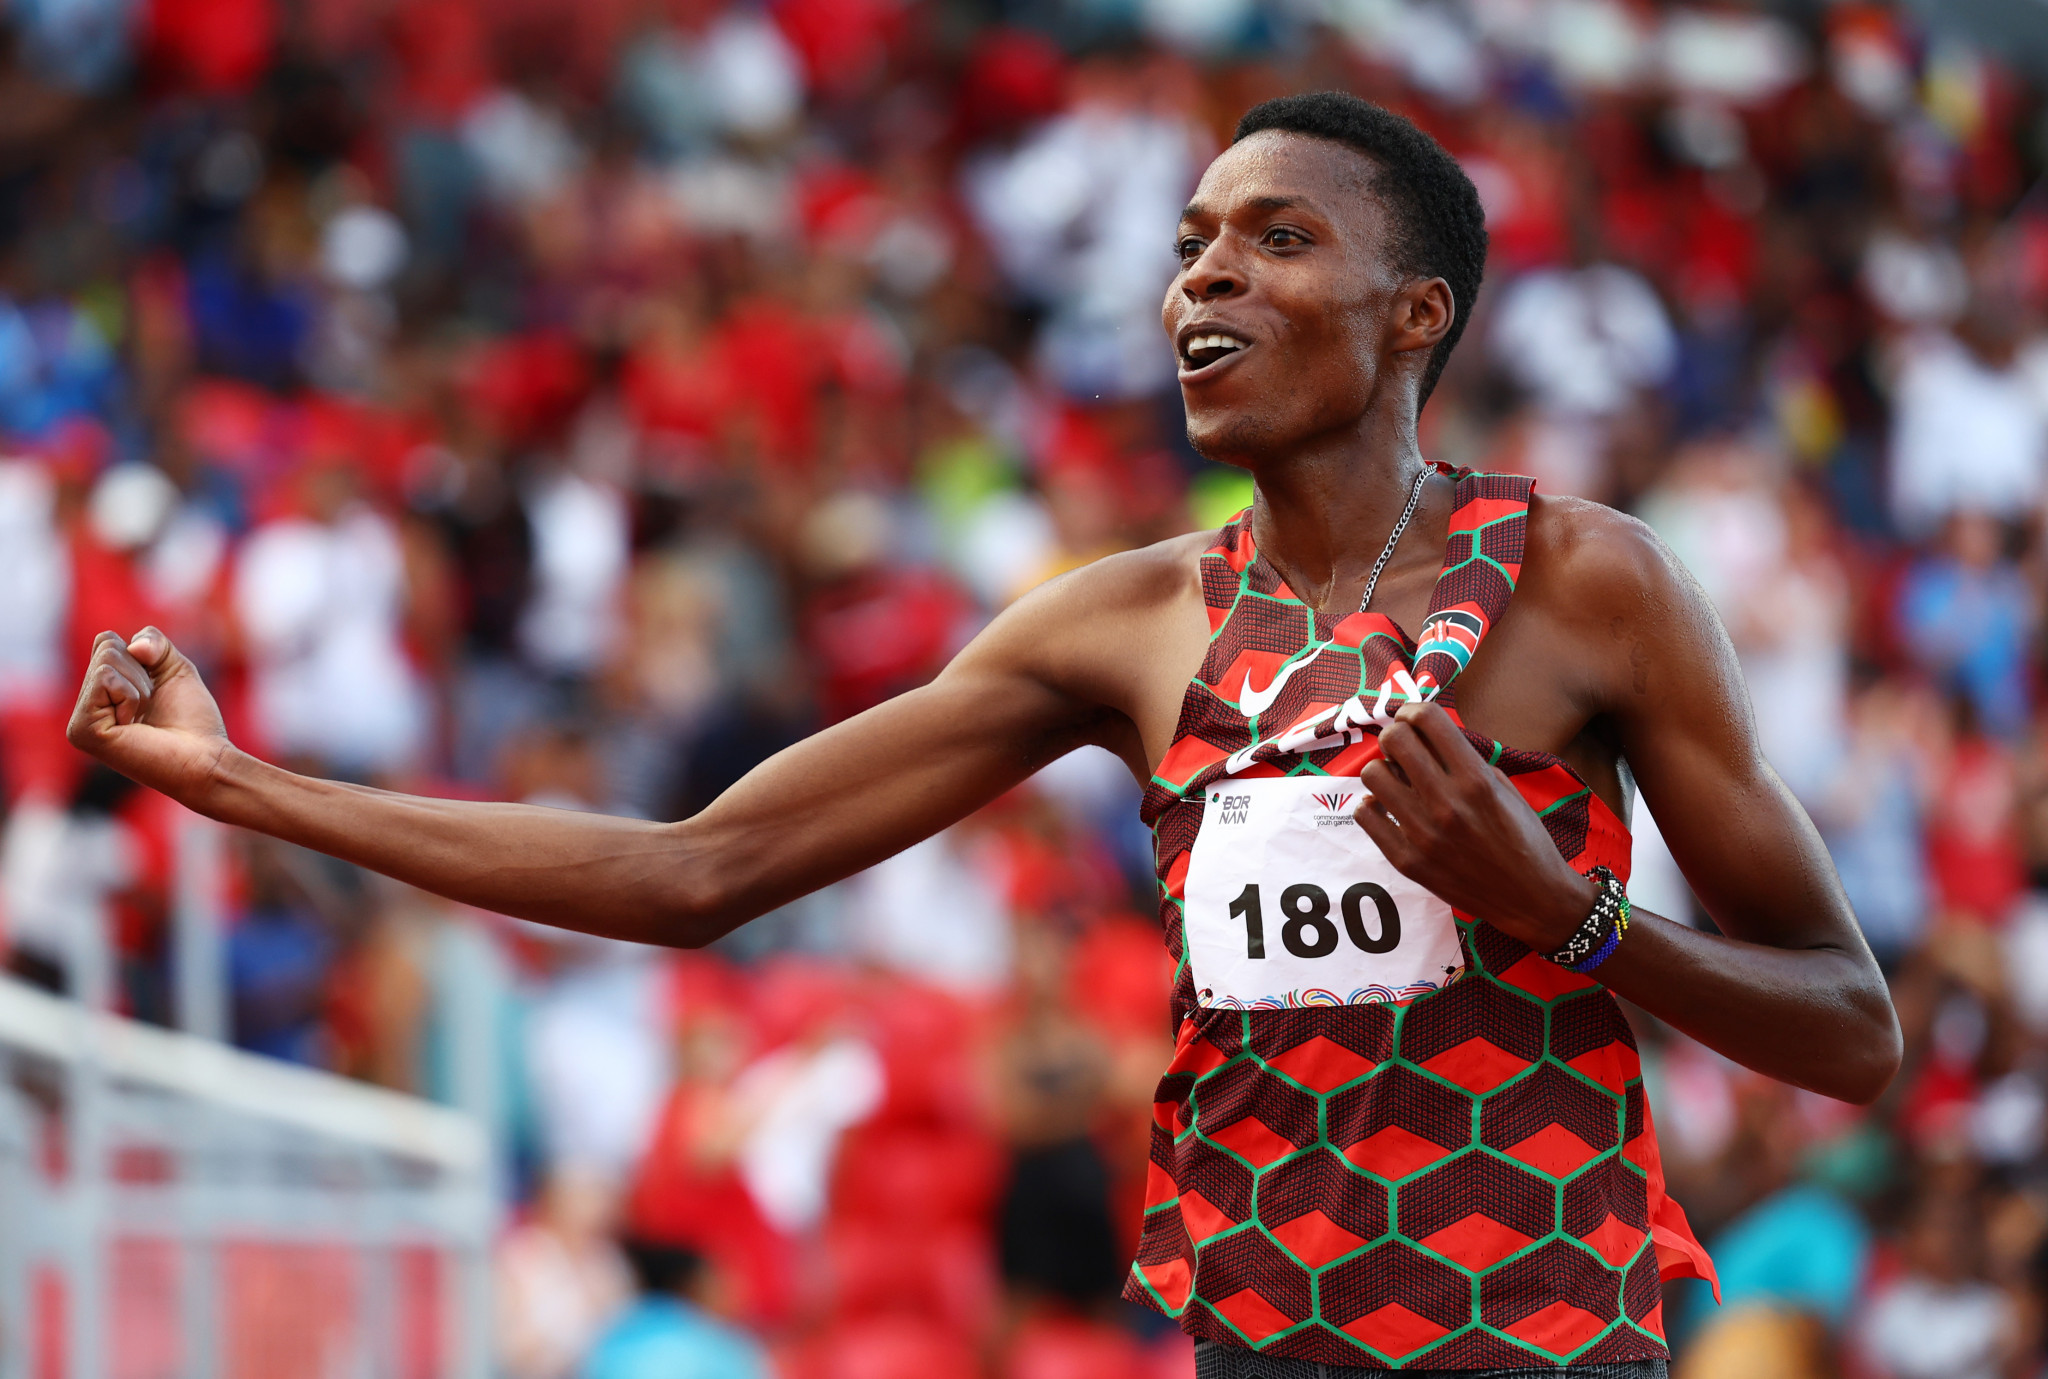 Jospat Sang Kipkirui of Kenya won a closely-fought men's 3,000m final ©Getty Images